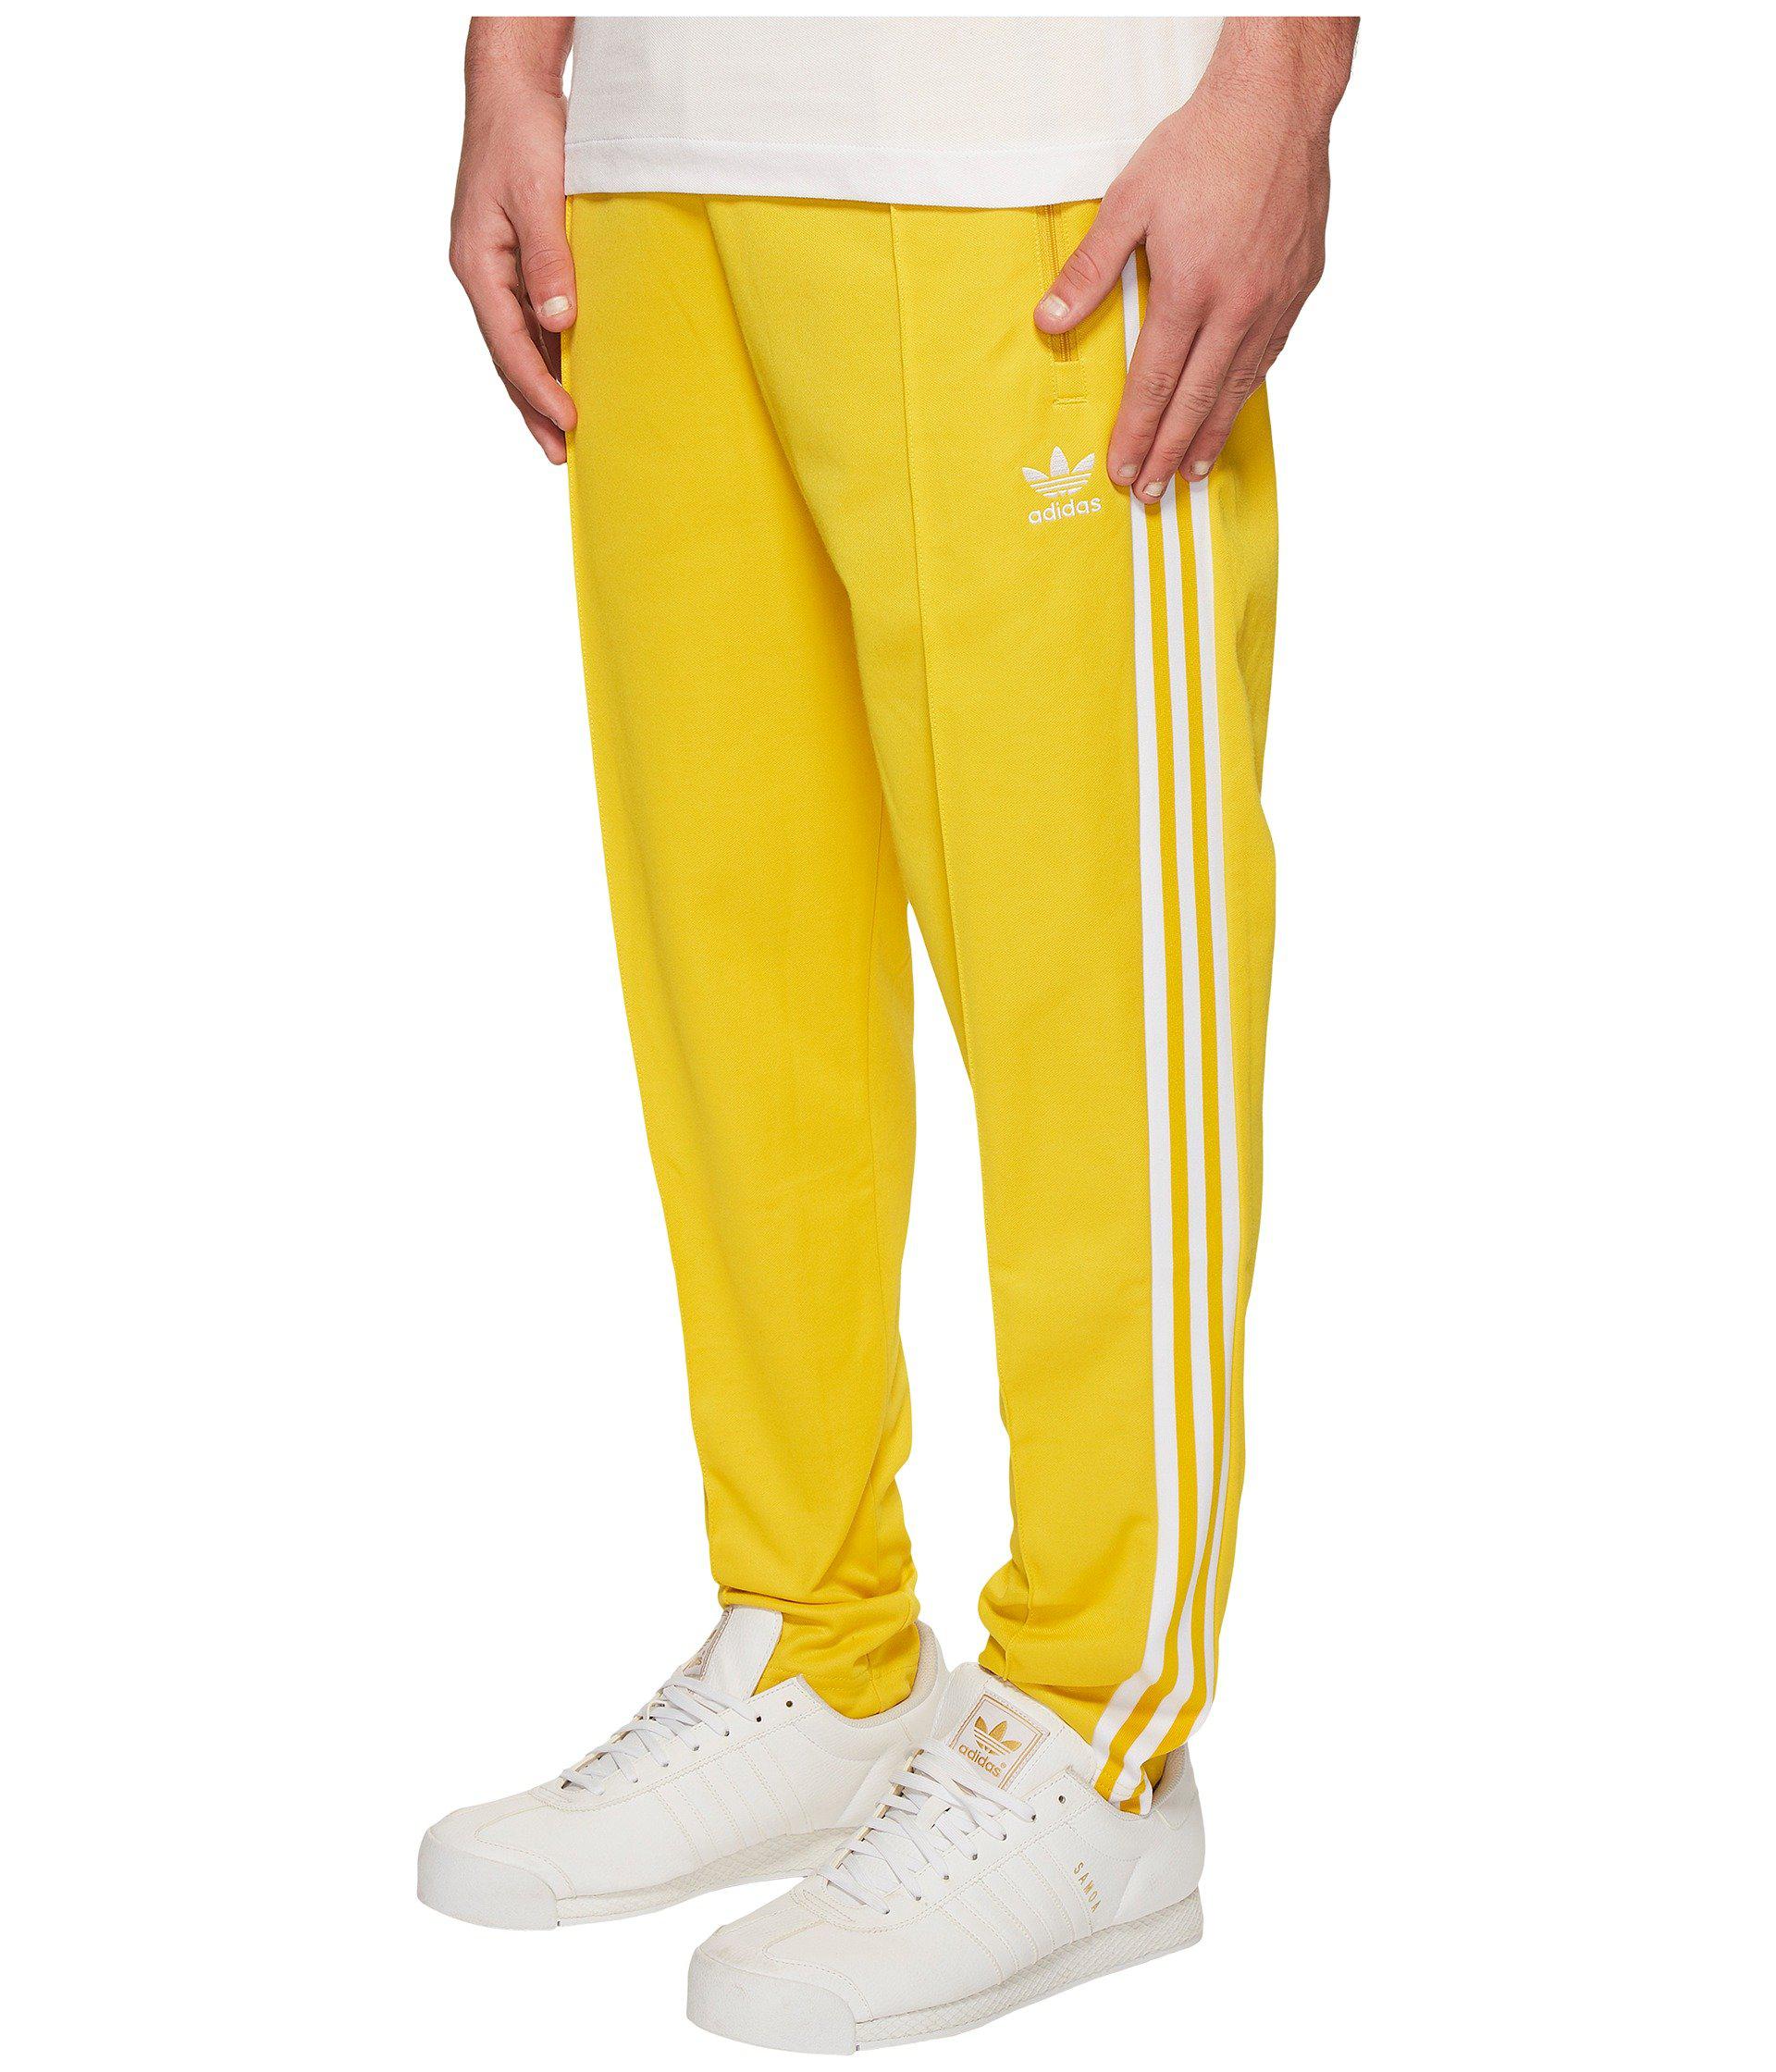 Adidas Originals Franz Beckenbauer Track Pants Flash Sales -  www.bridgepartnersllc.com 1695278961